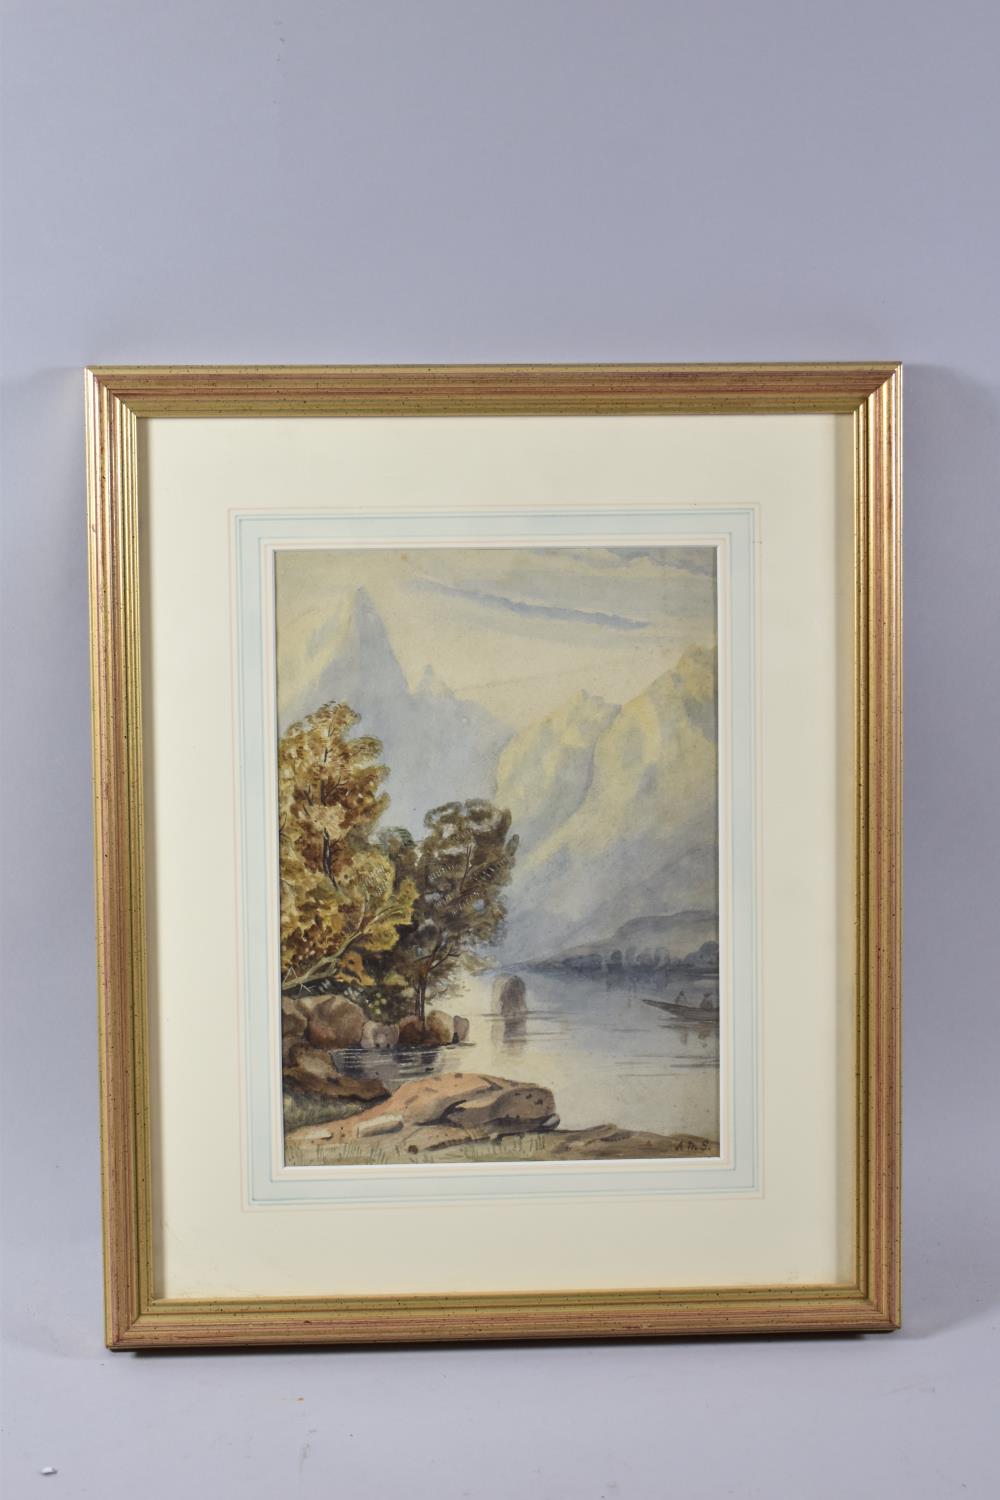 A Framed Watercolour Depicting 19th Century Lake Scene, 19x27cm